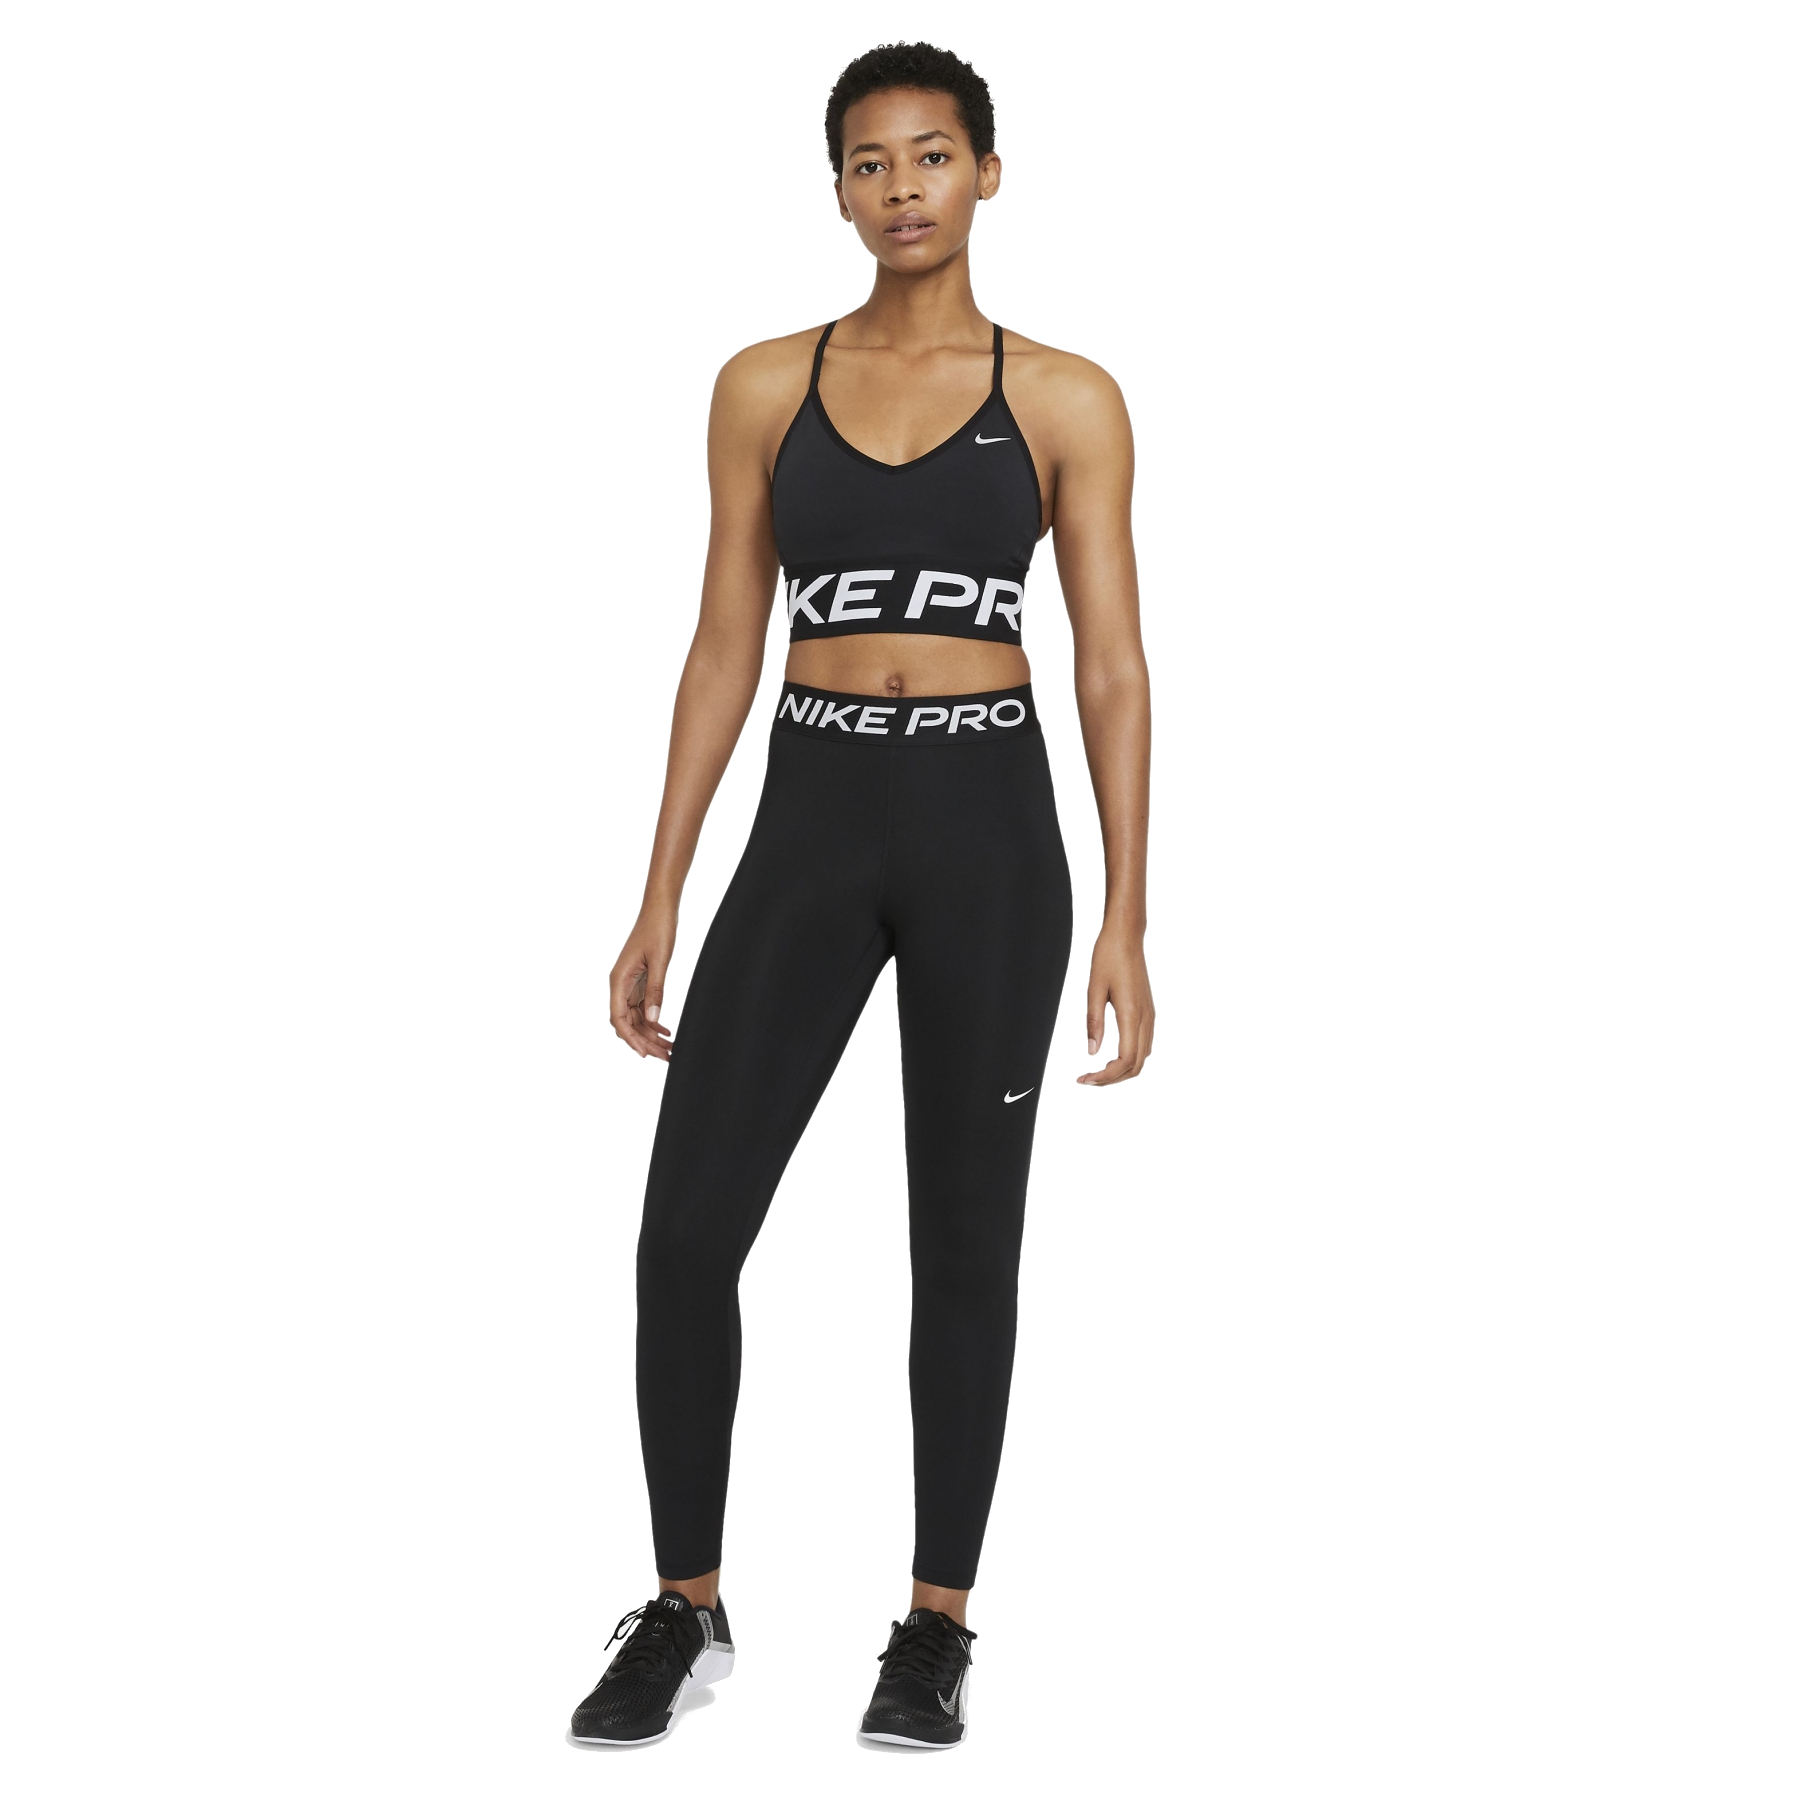 Nike Pro Womens Tights (Black-White), Nike